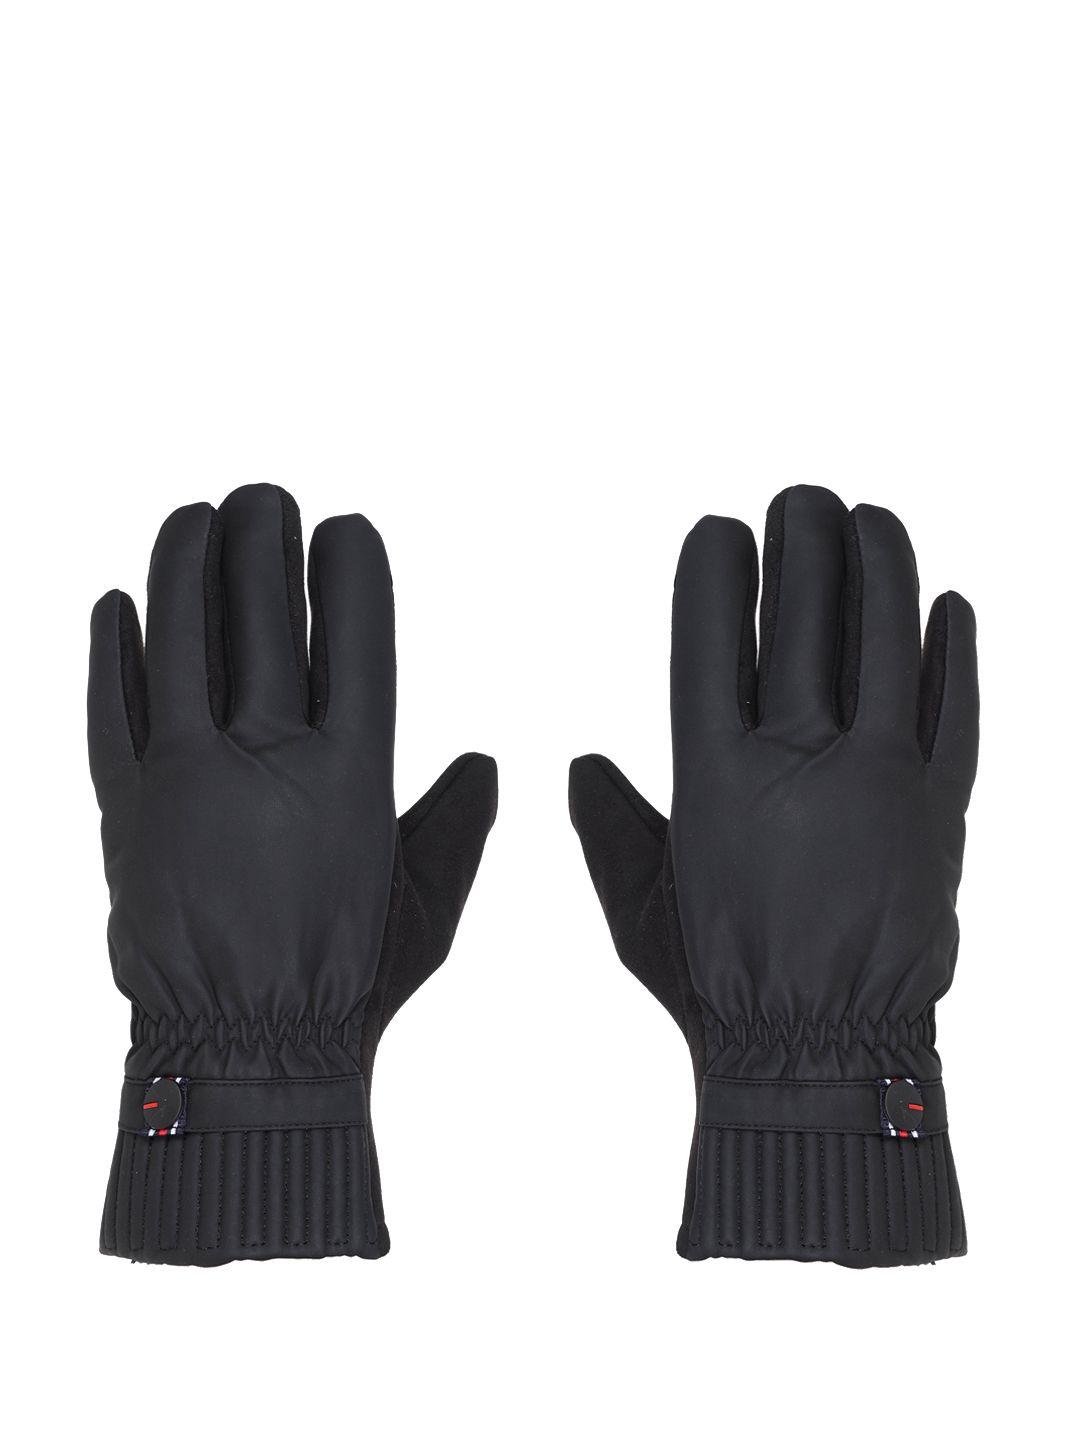 fabseasons black solid winter gloves